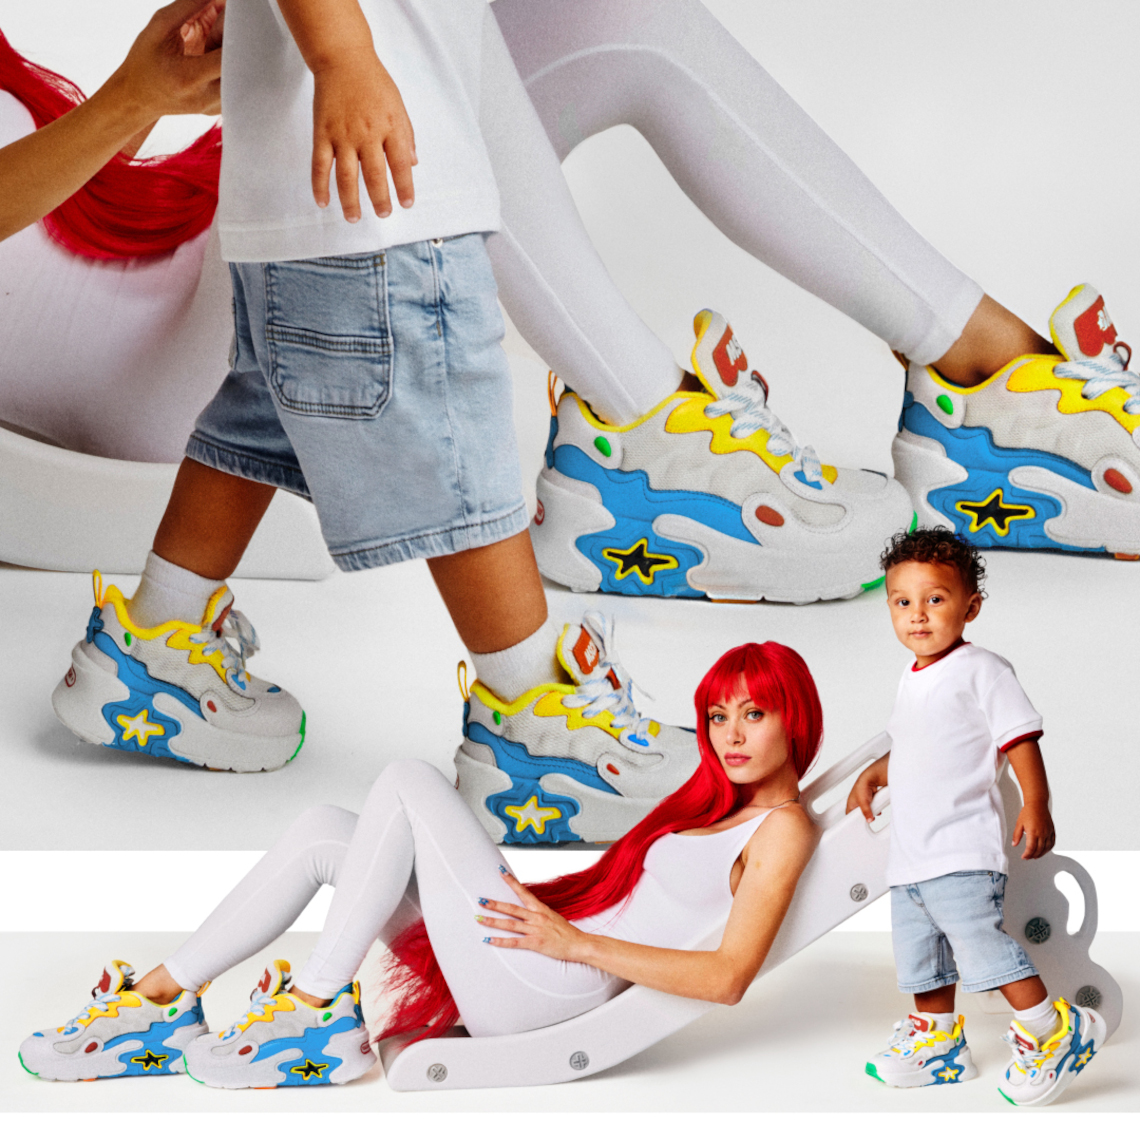 Mschf Super Baby air Shoe Release Date 8